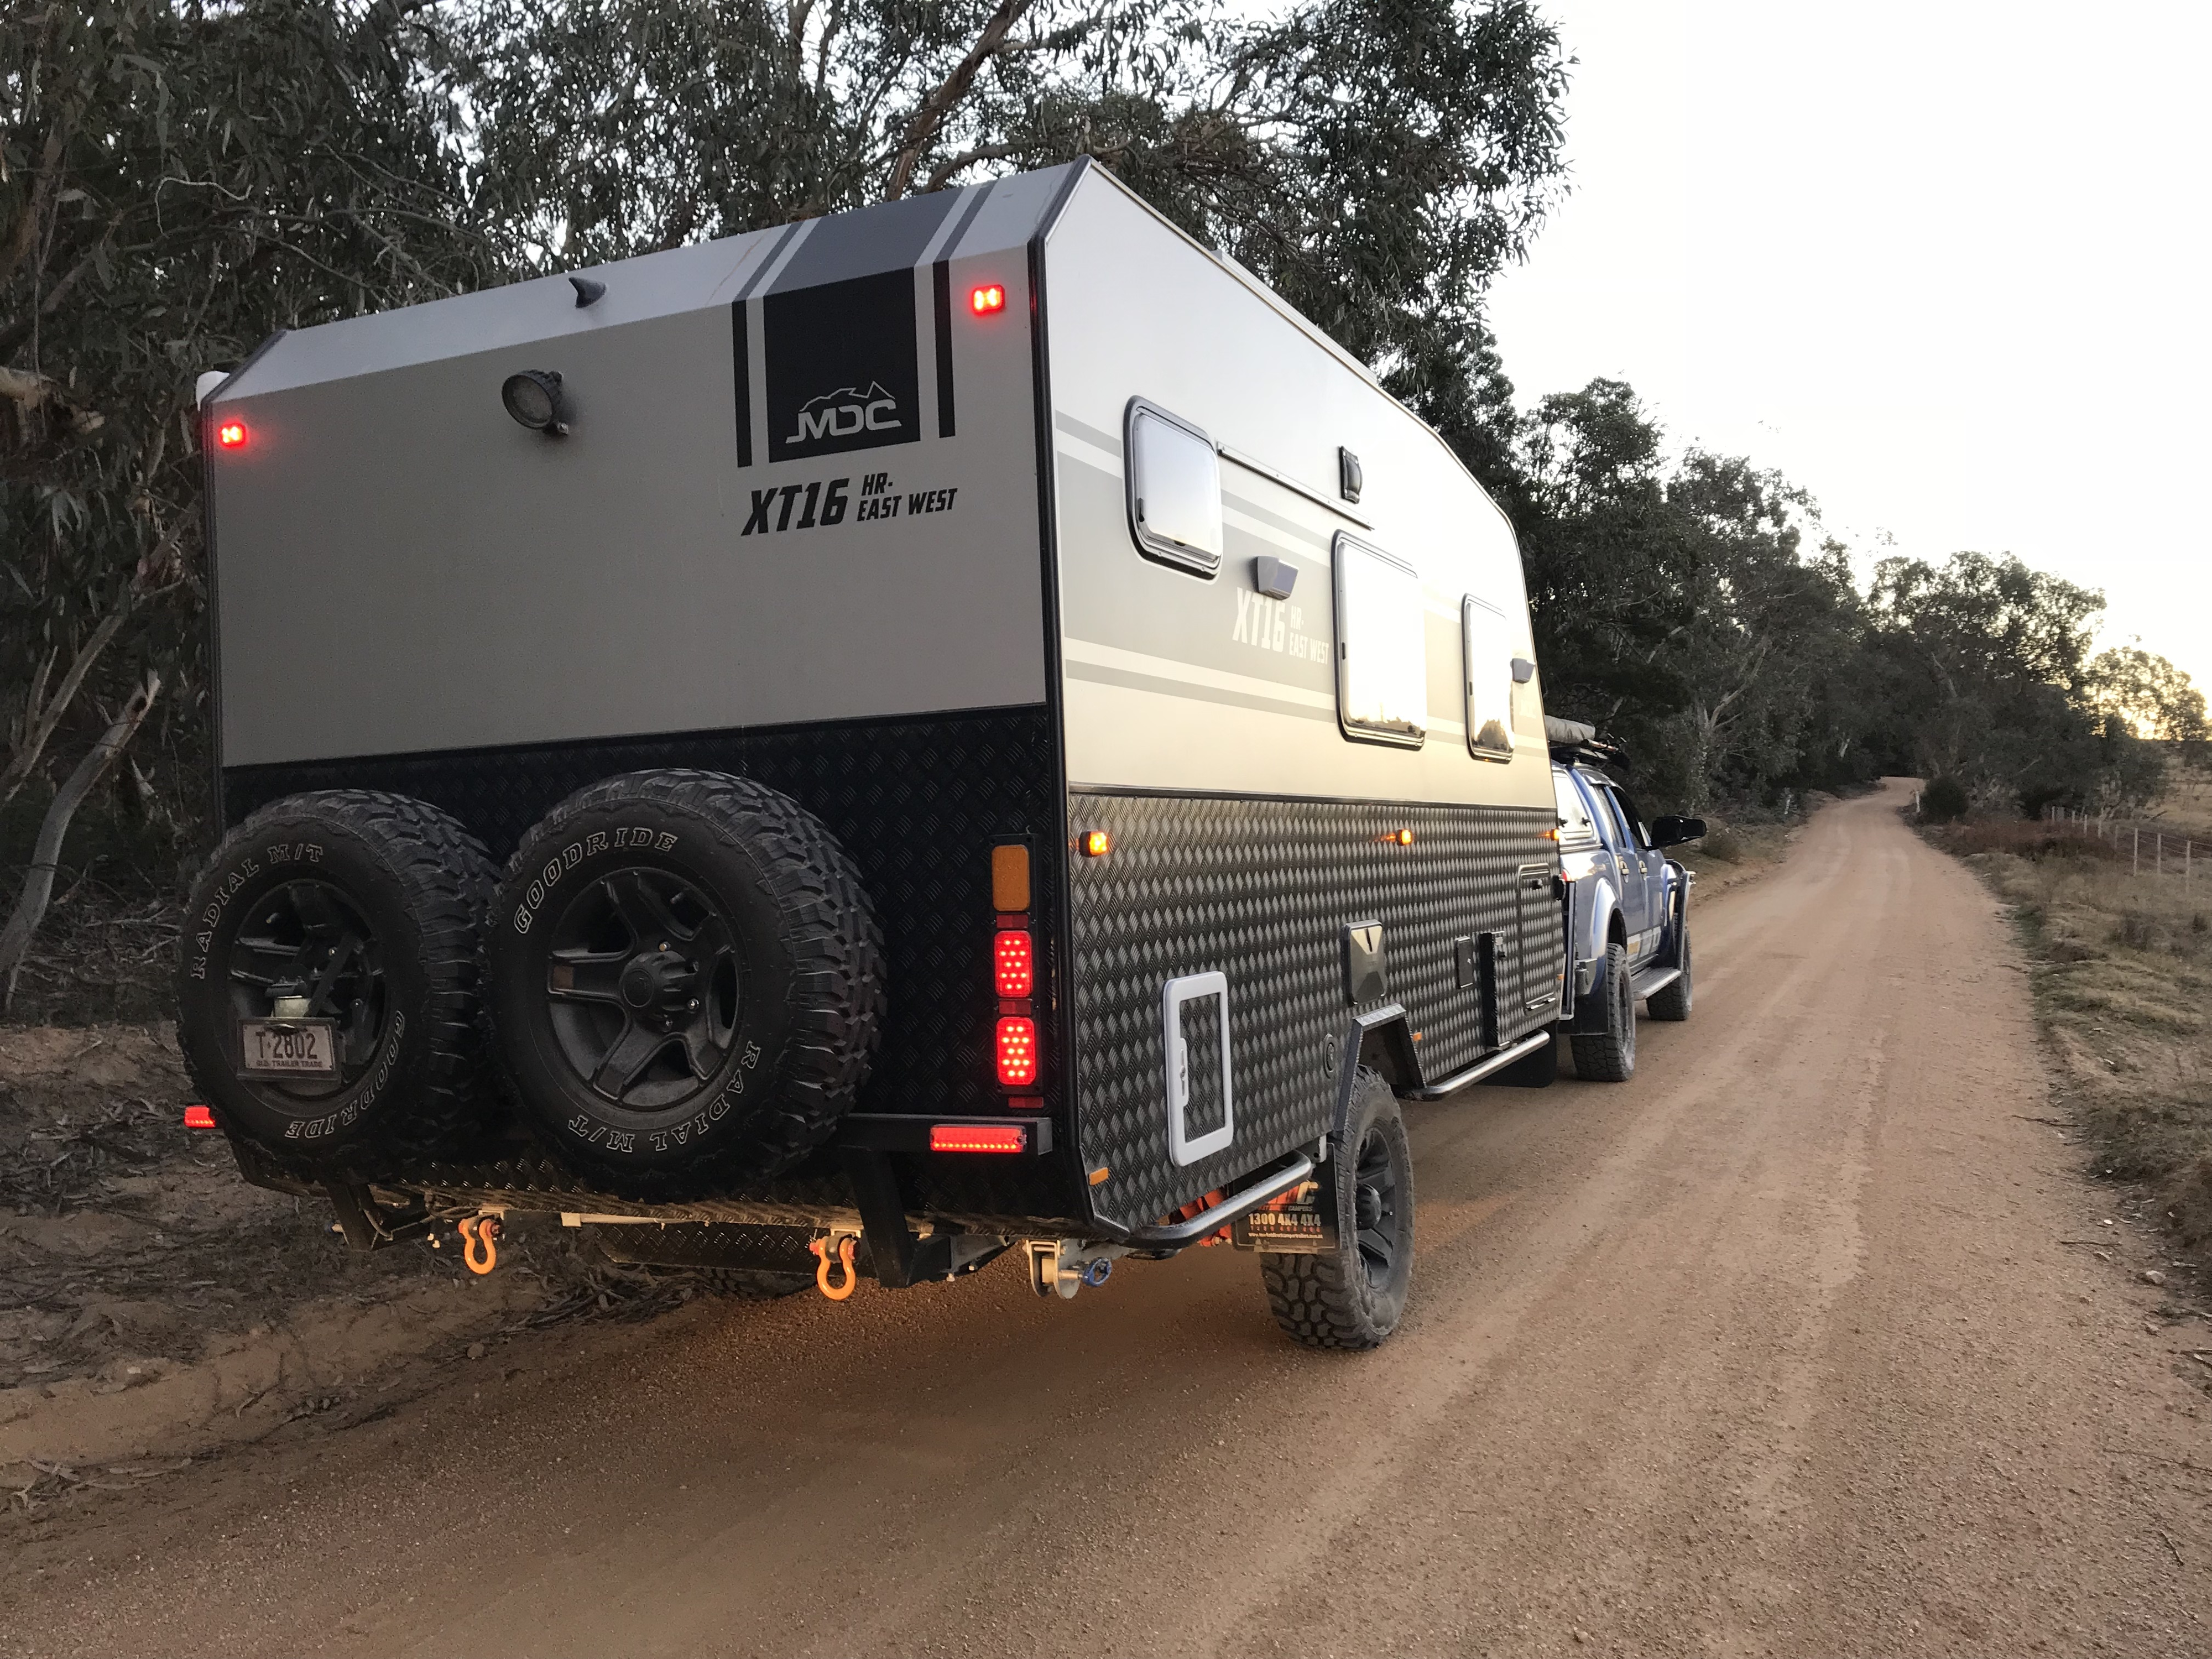 Road Trips Australia Episode 15